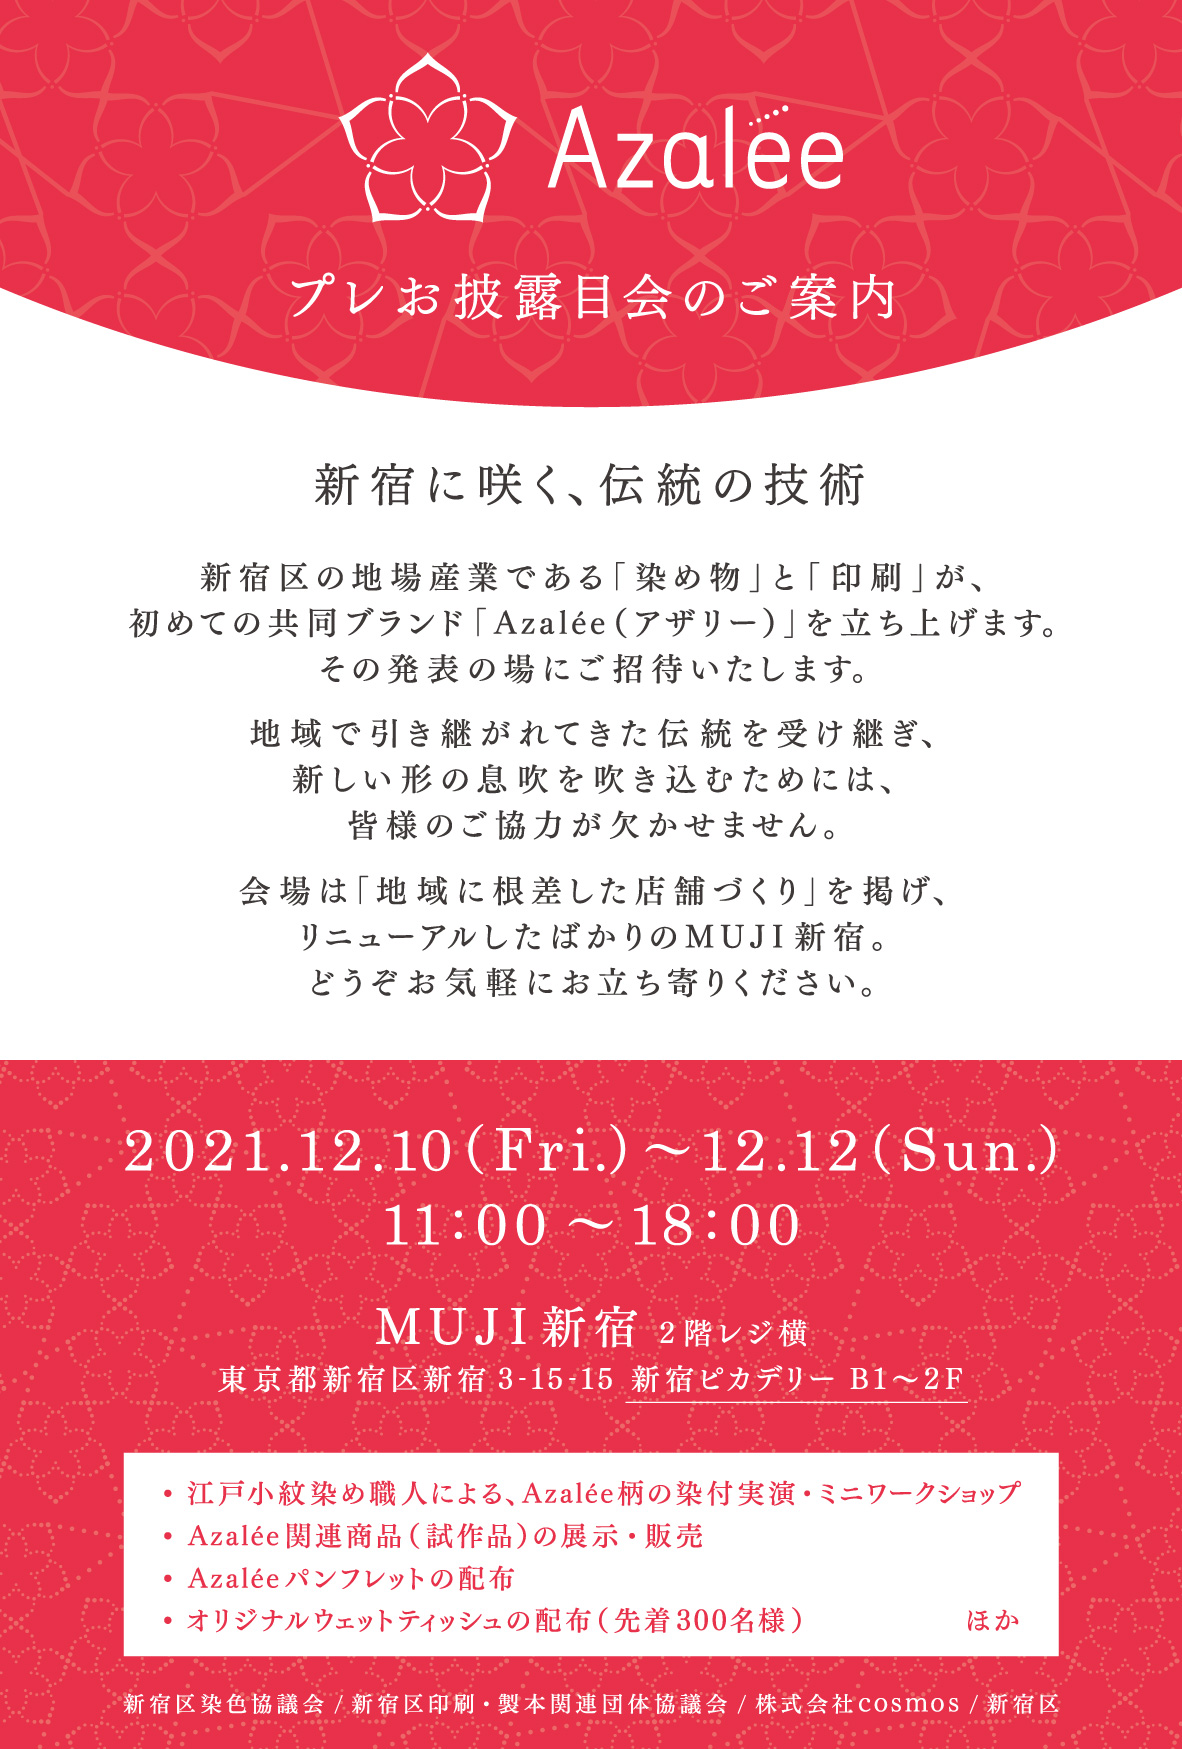 Azalee_MUJI_invitation